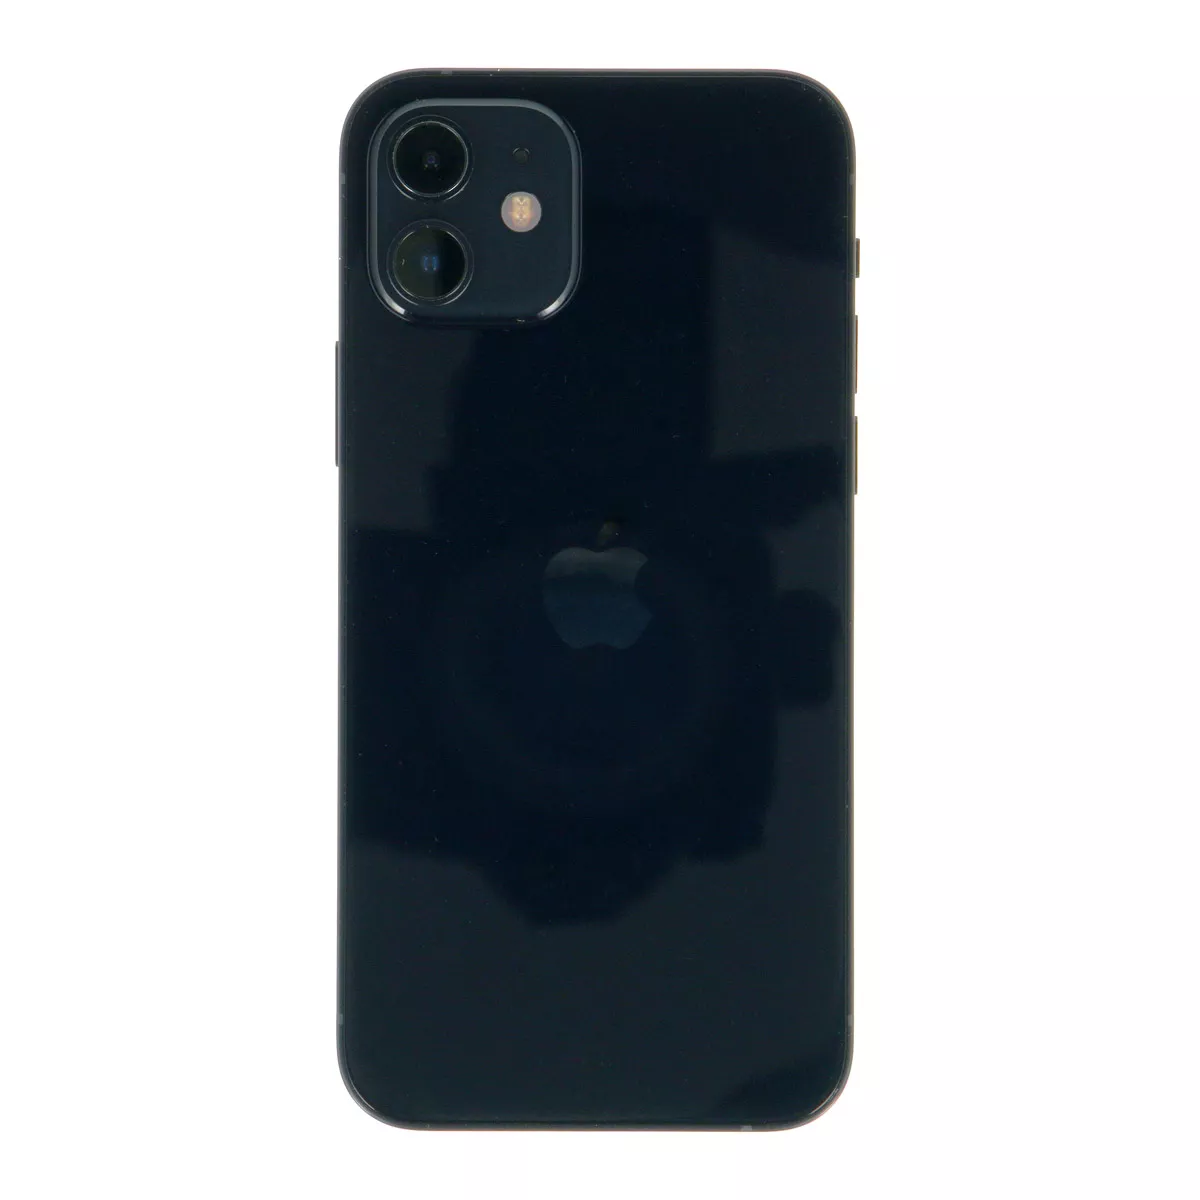 Apple iPhone 12 Mini 256 GB Black B